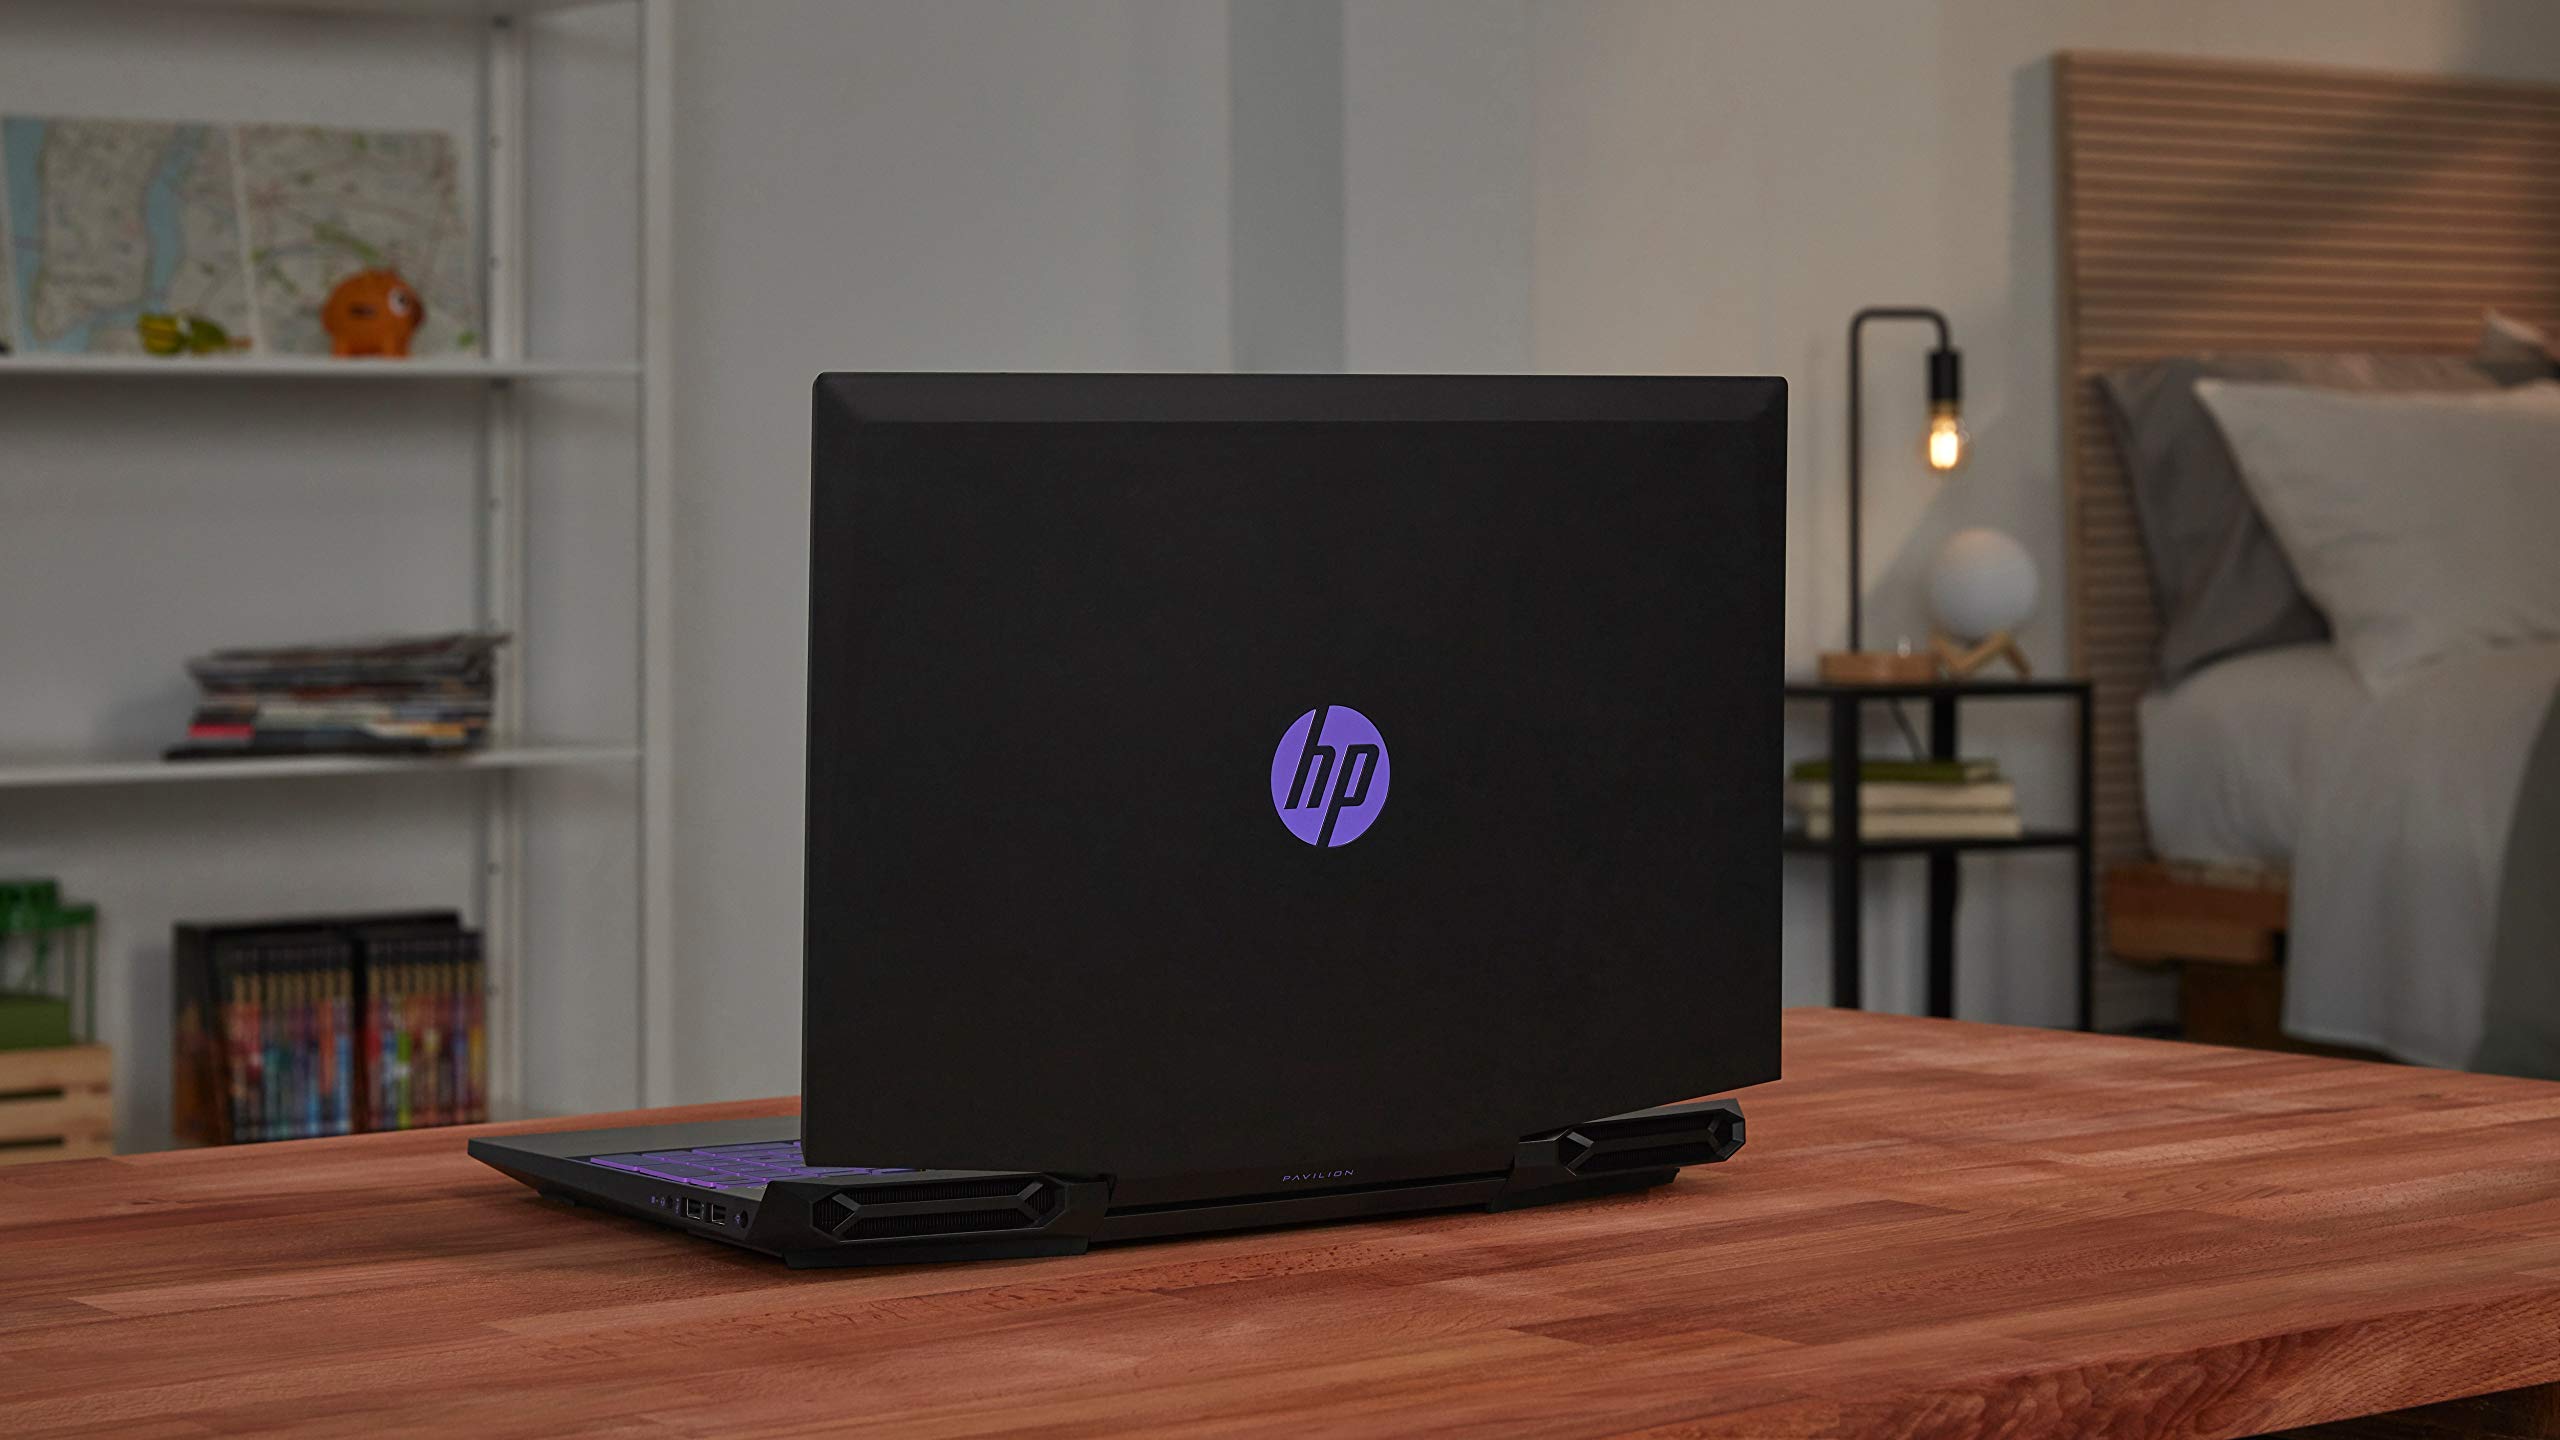 HP Latest 2020 Pavilion Gaming Laptop 15.6